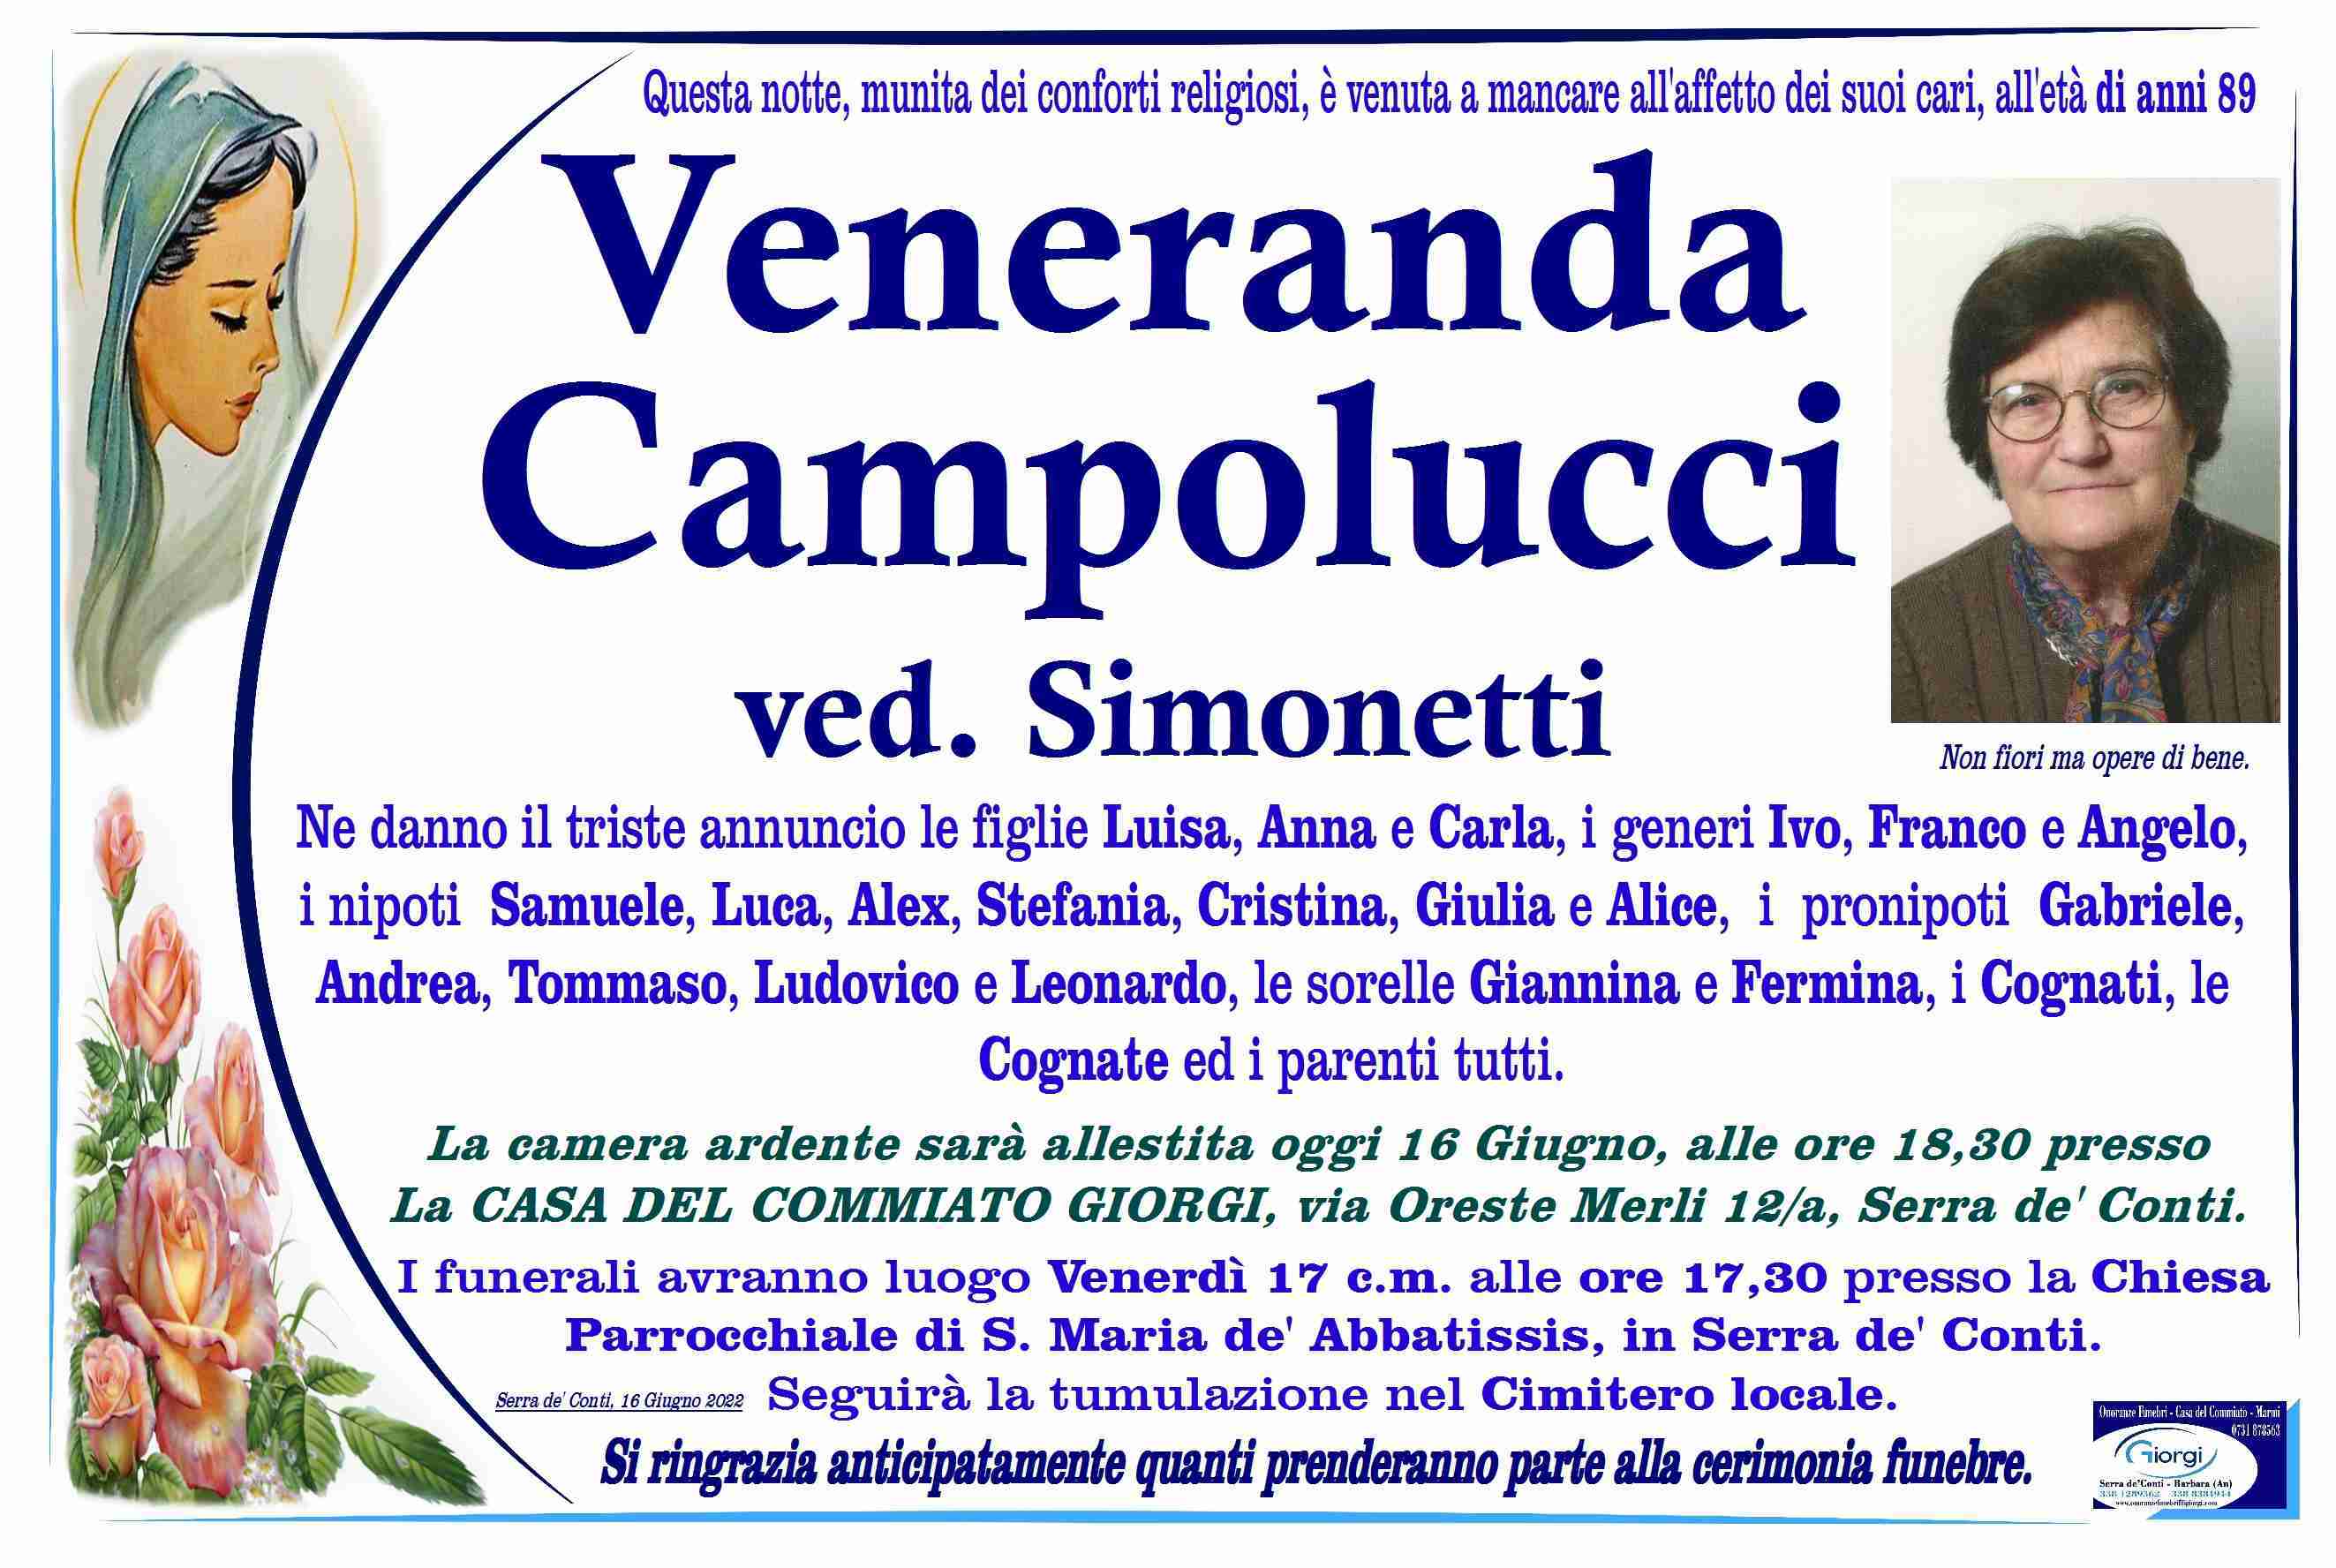 Veneranda Campolucci